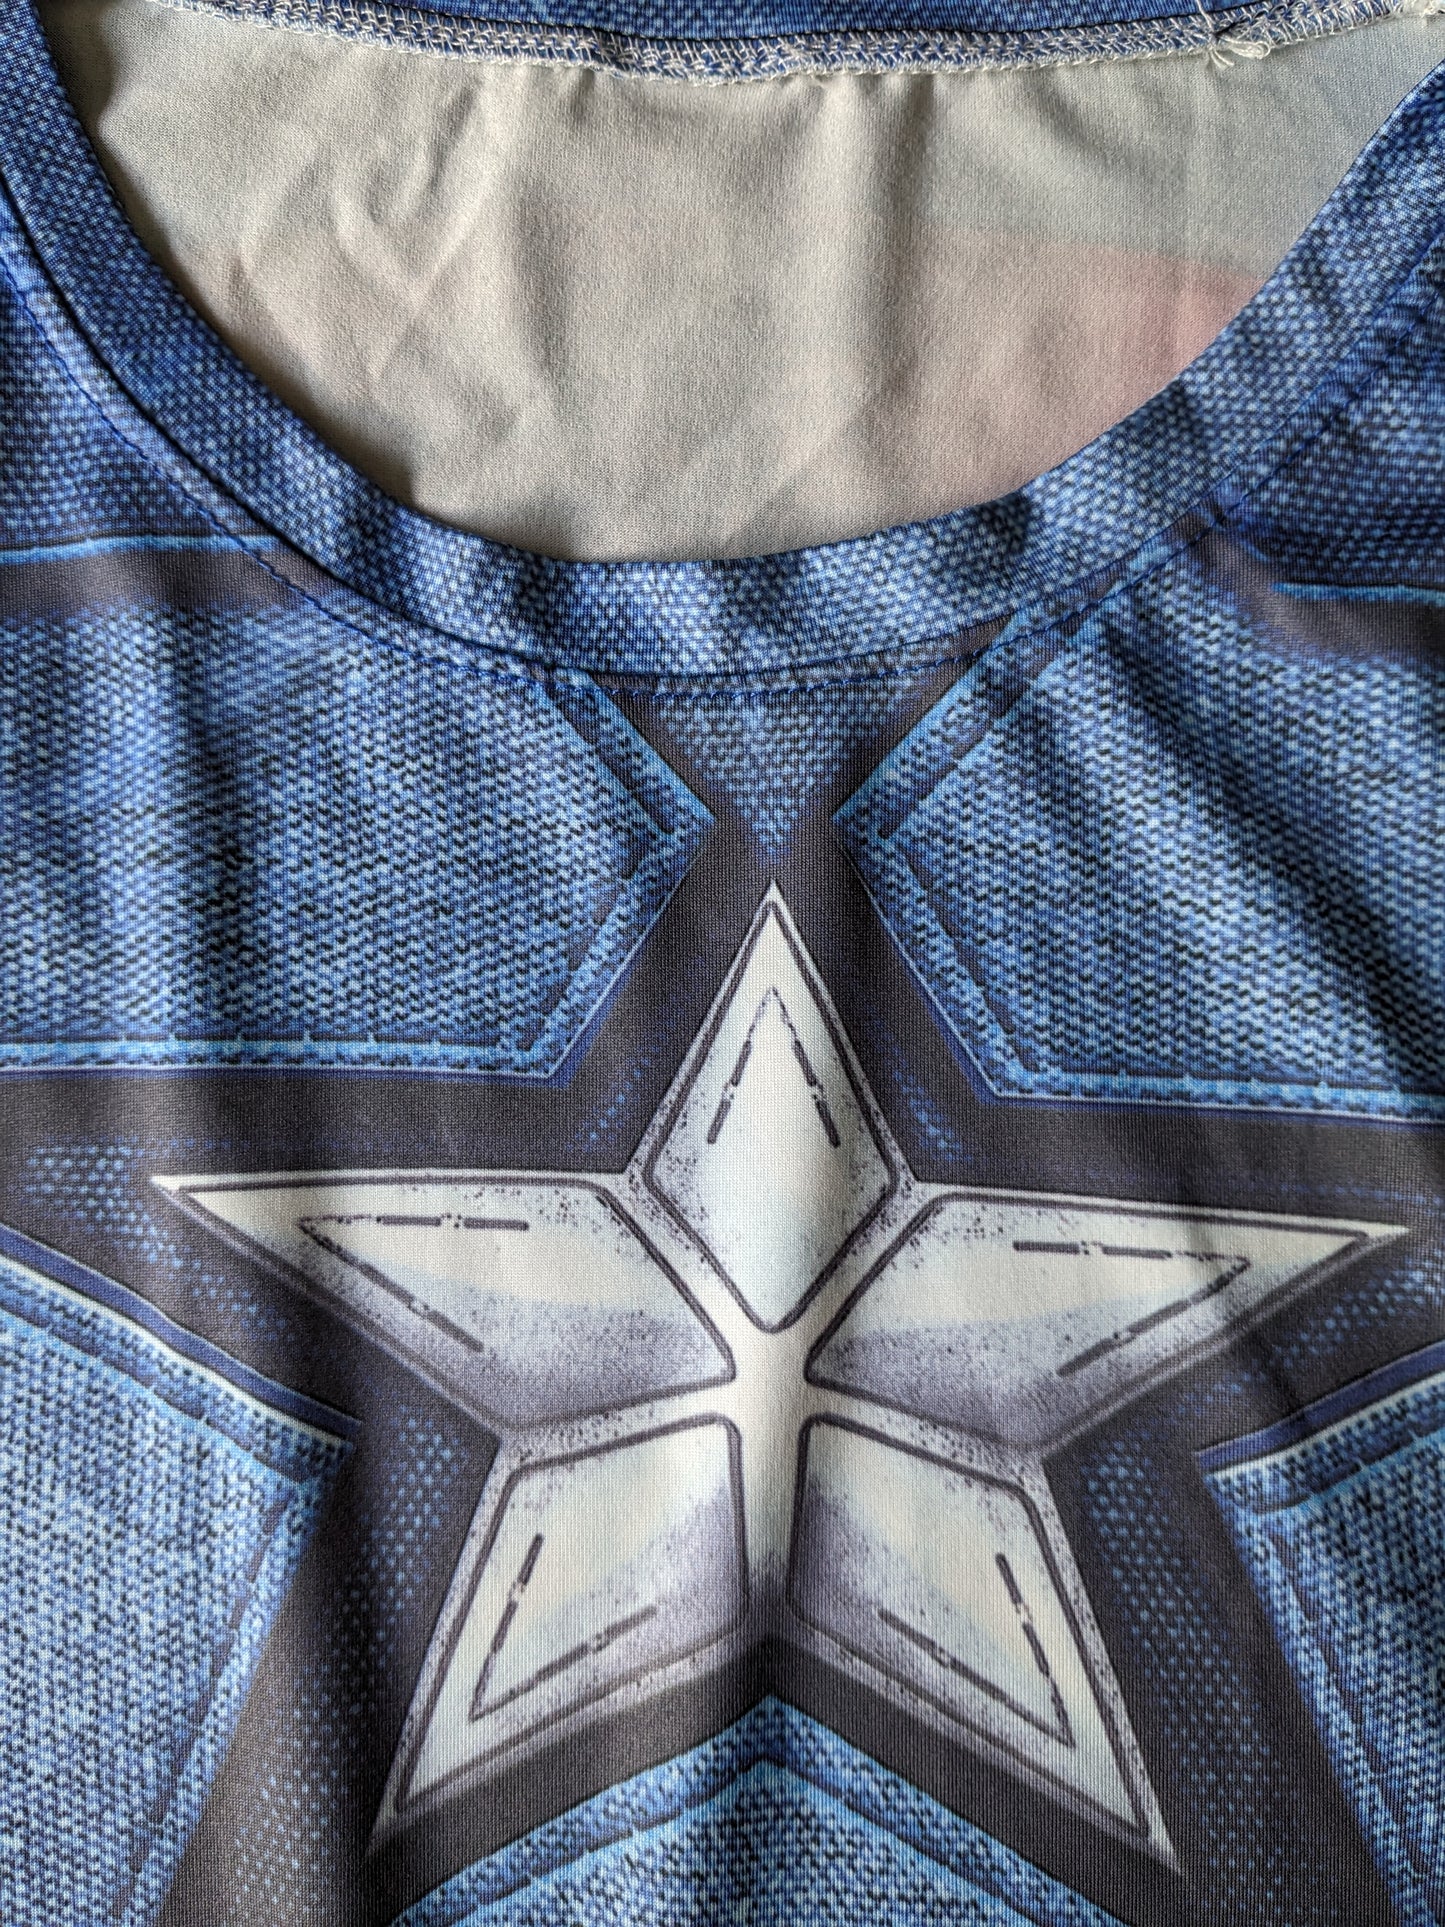 Captain America shirt. Rood Wit Blauwe print. Maat  M / L. stretch.